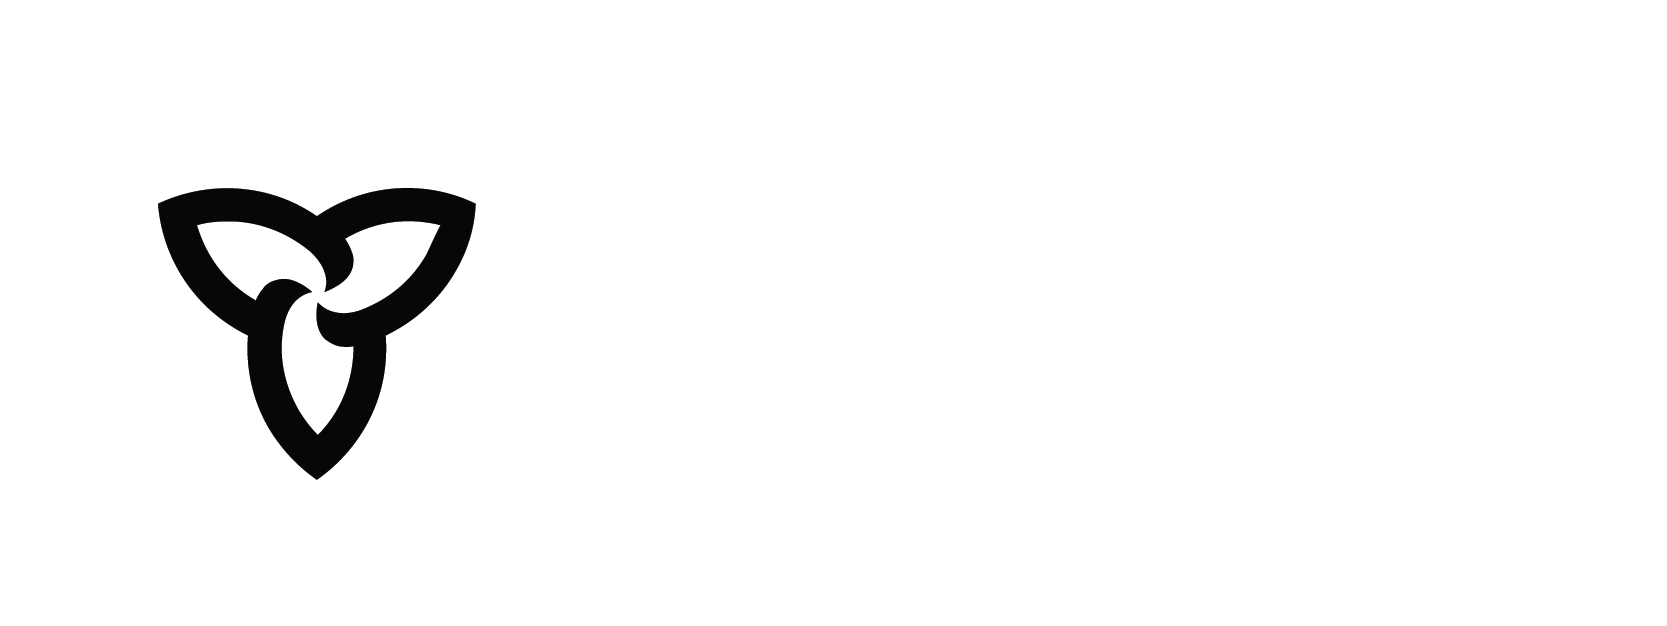 Invest Ontario logo - English, white transparent